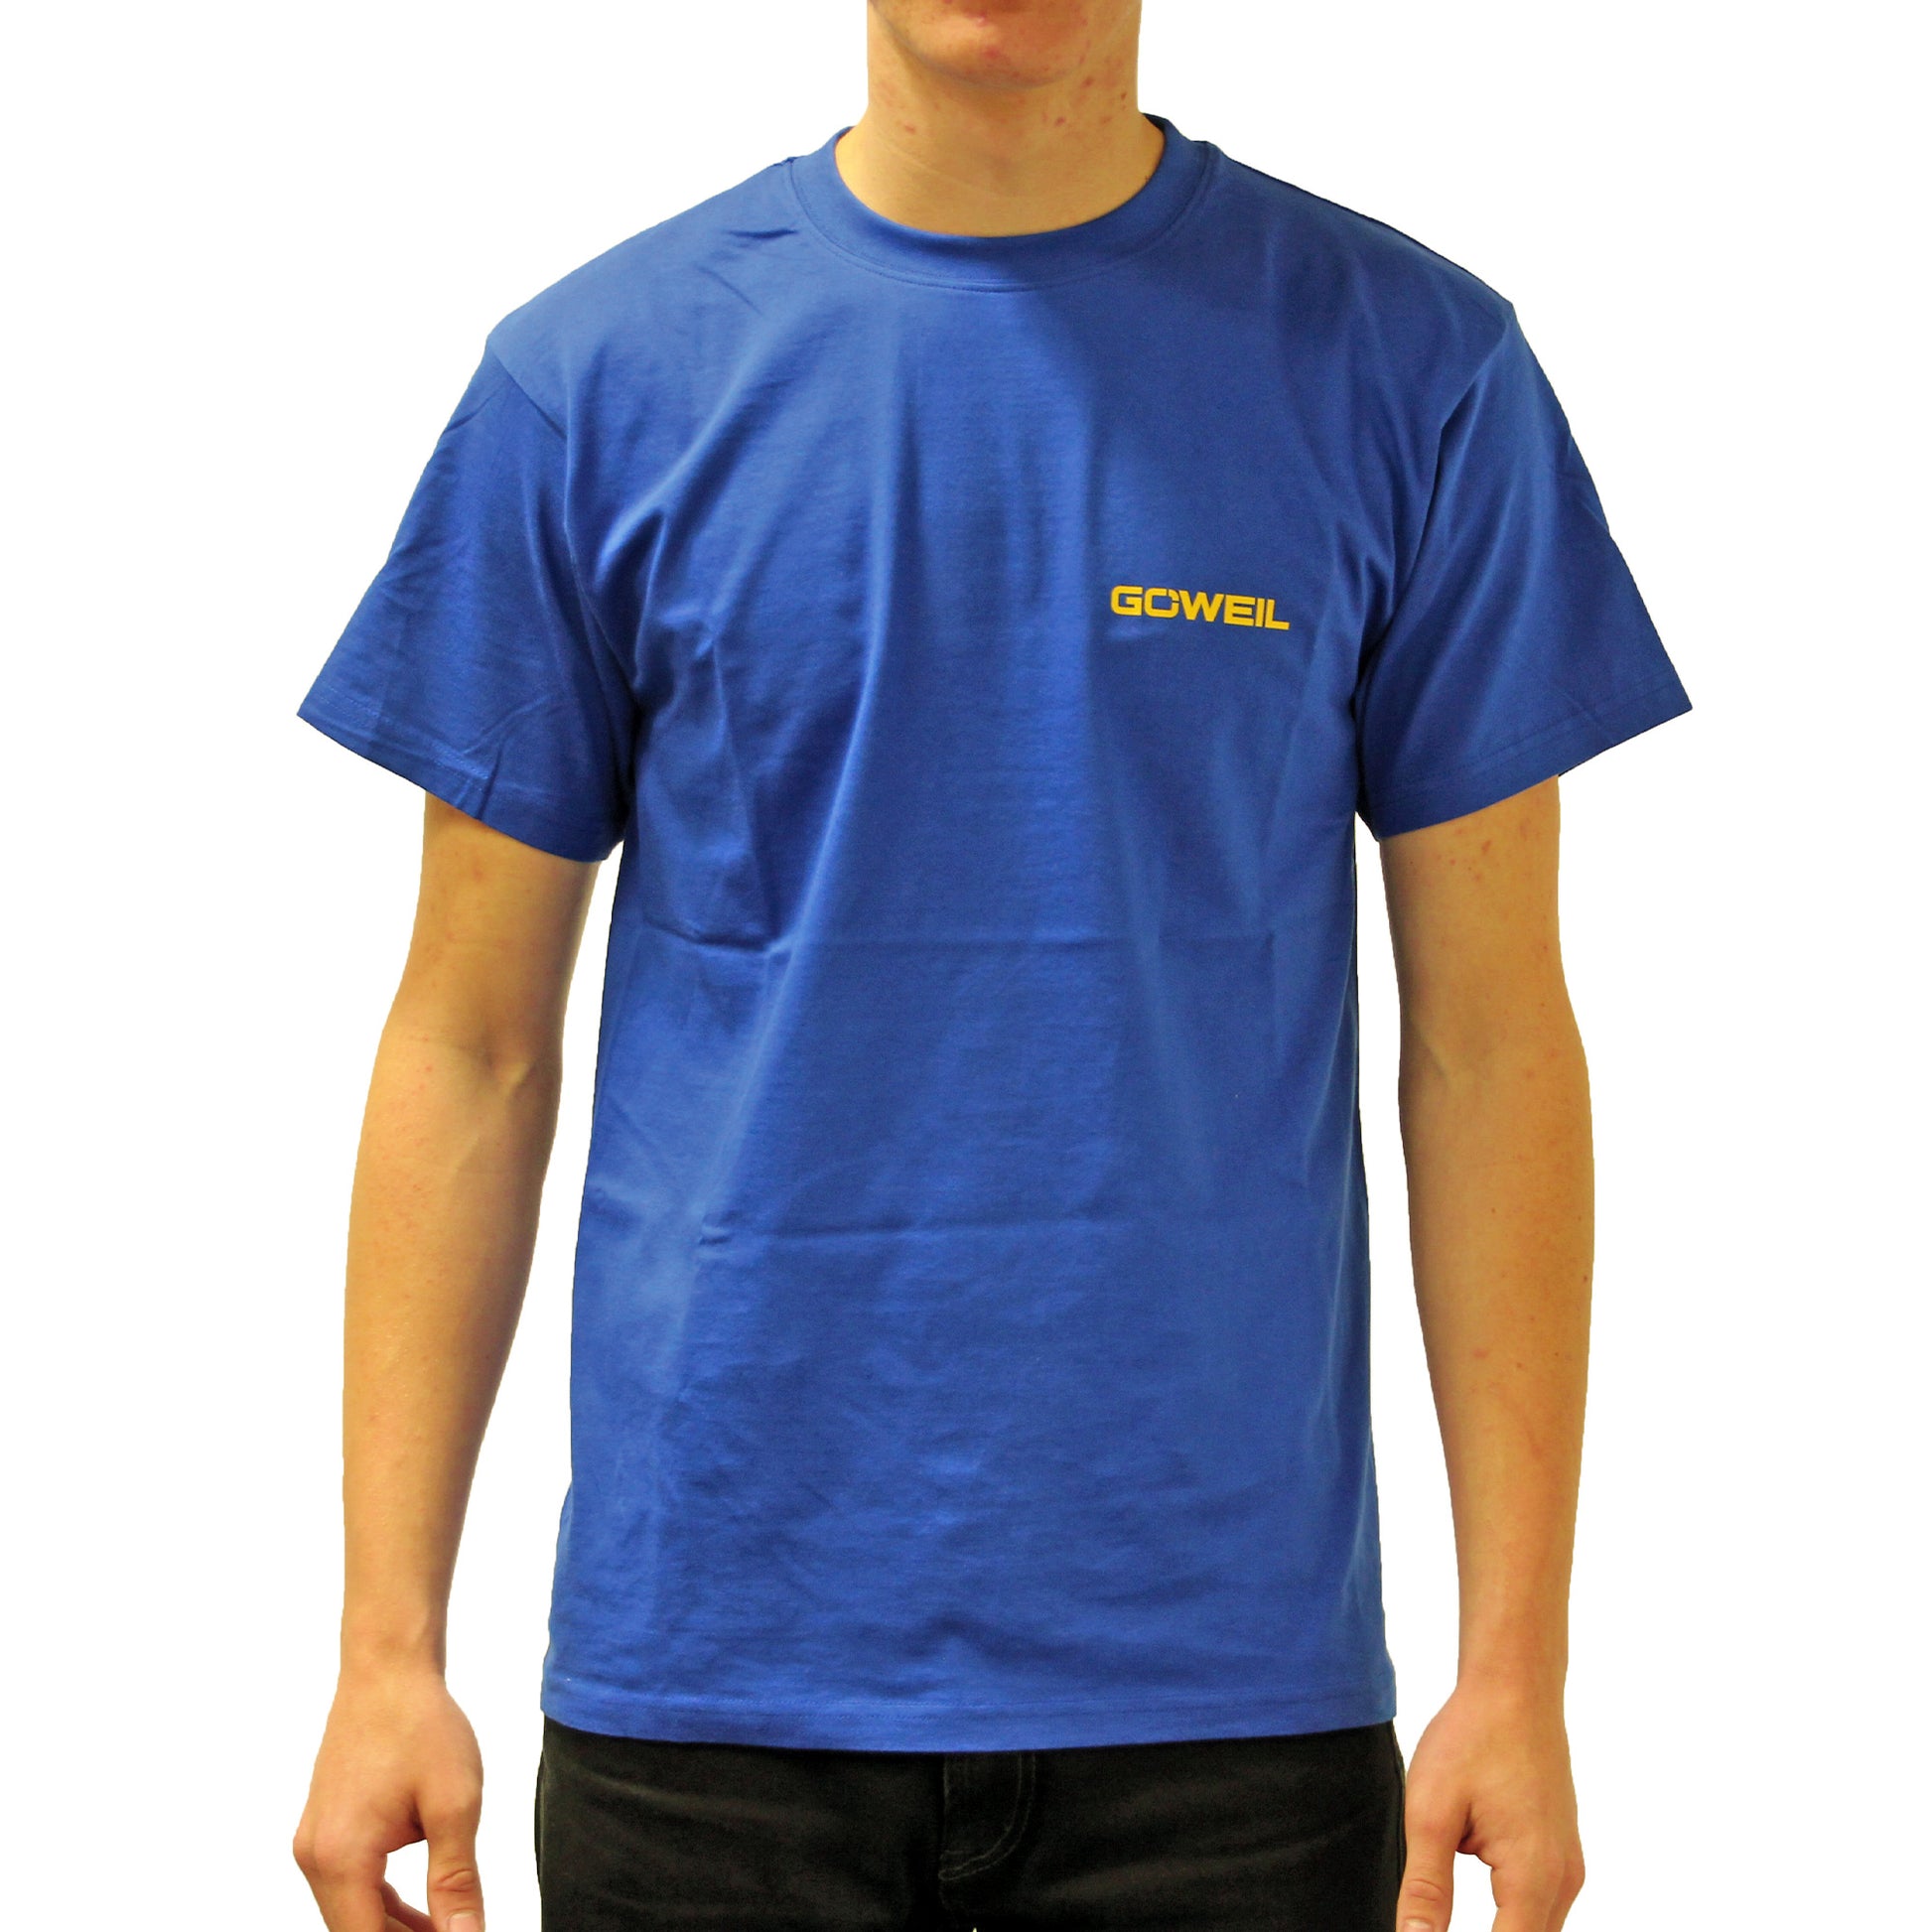 GÖWEIL T-Shirt in blau